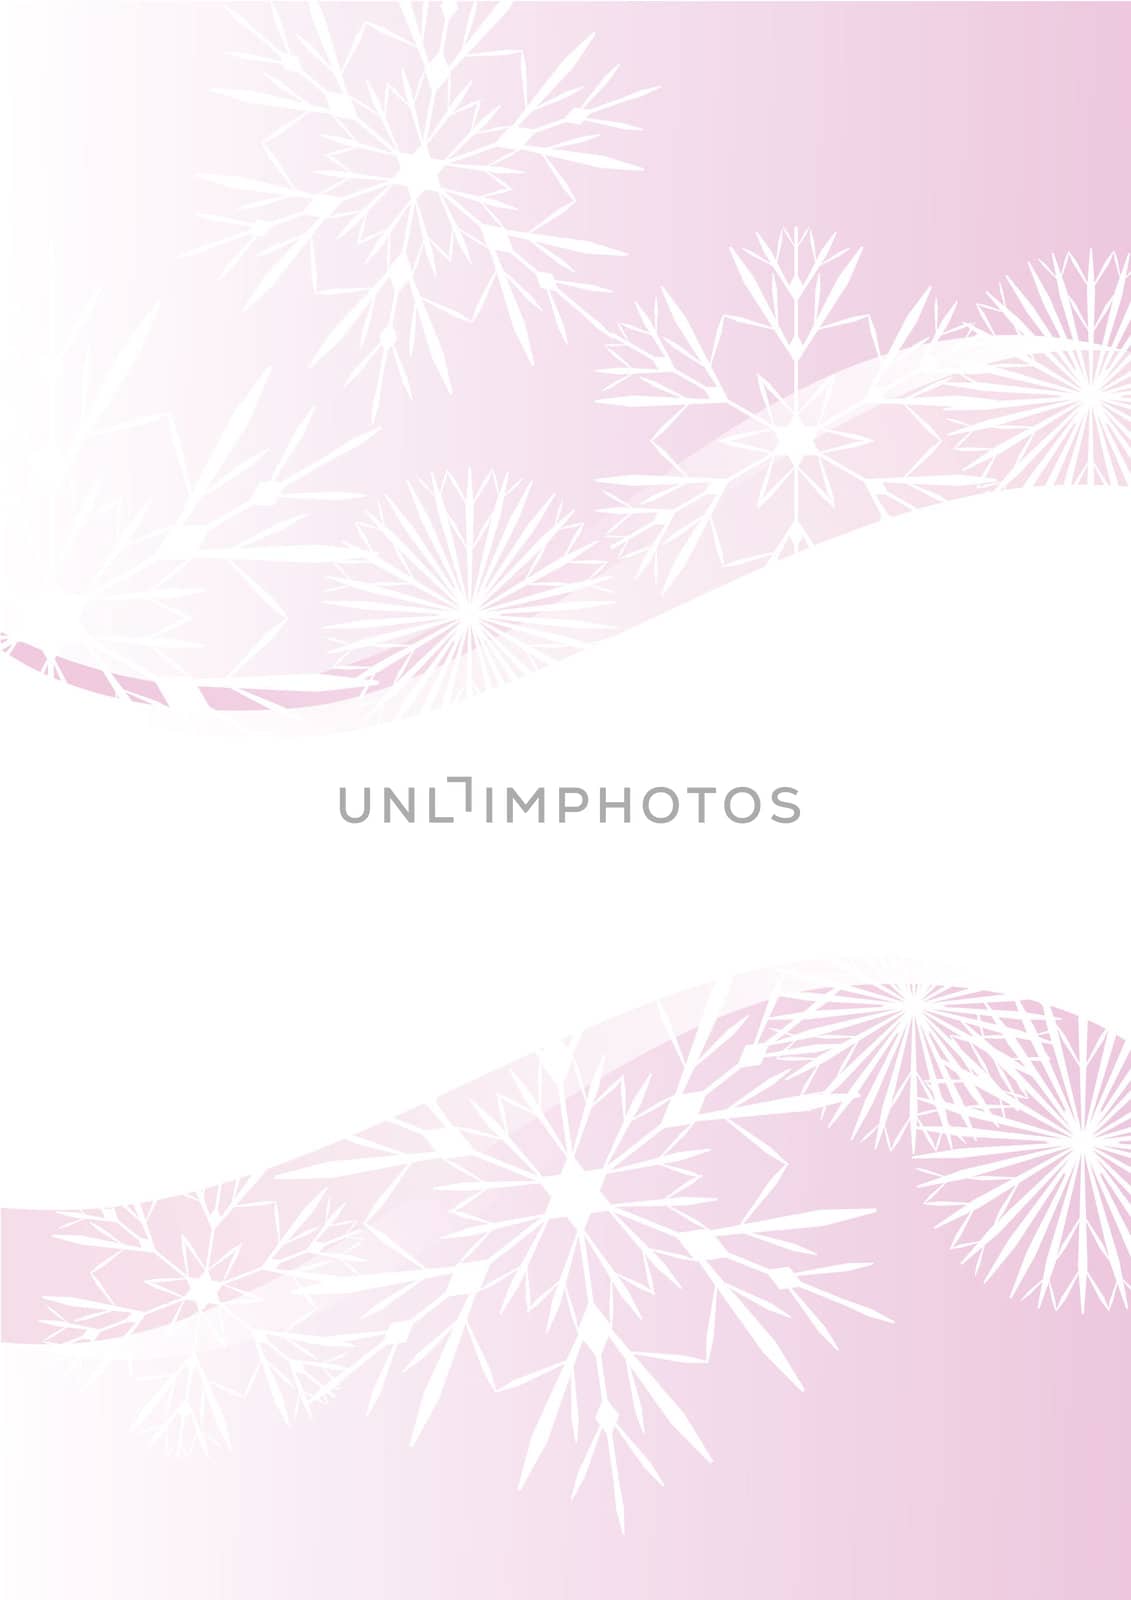 snowflakes abstract vector pink  backdrop by CherJu